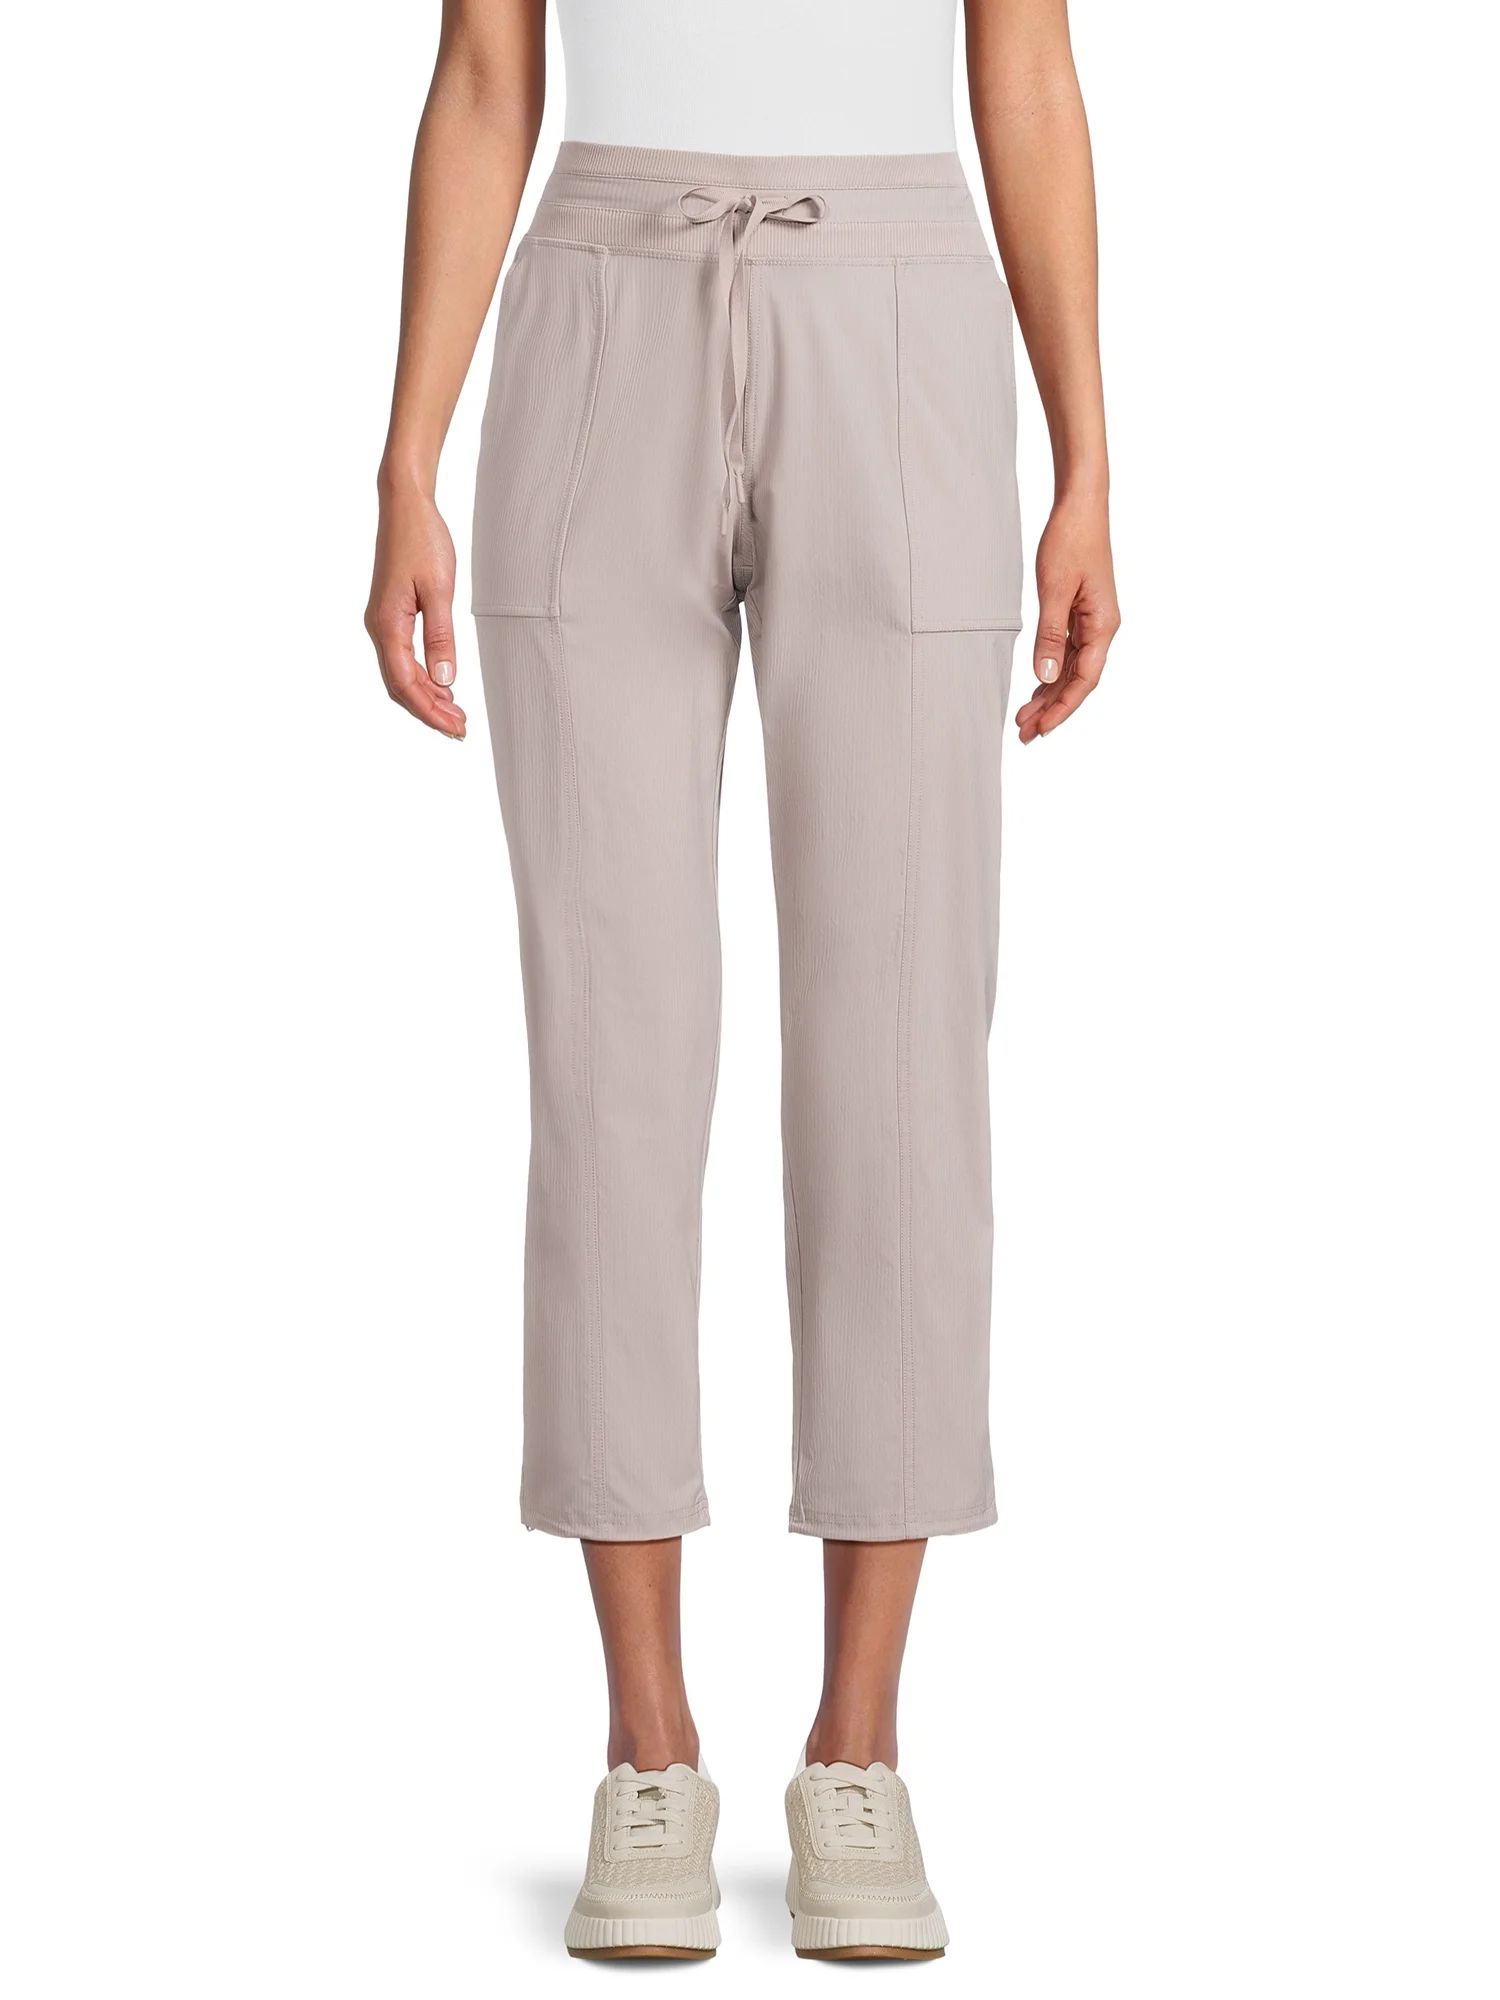 Avia Women's Pull On Commuter Pants, 27.5” Inseam, Sizes XS-XXXL | Walmart (US)